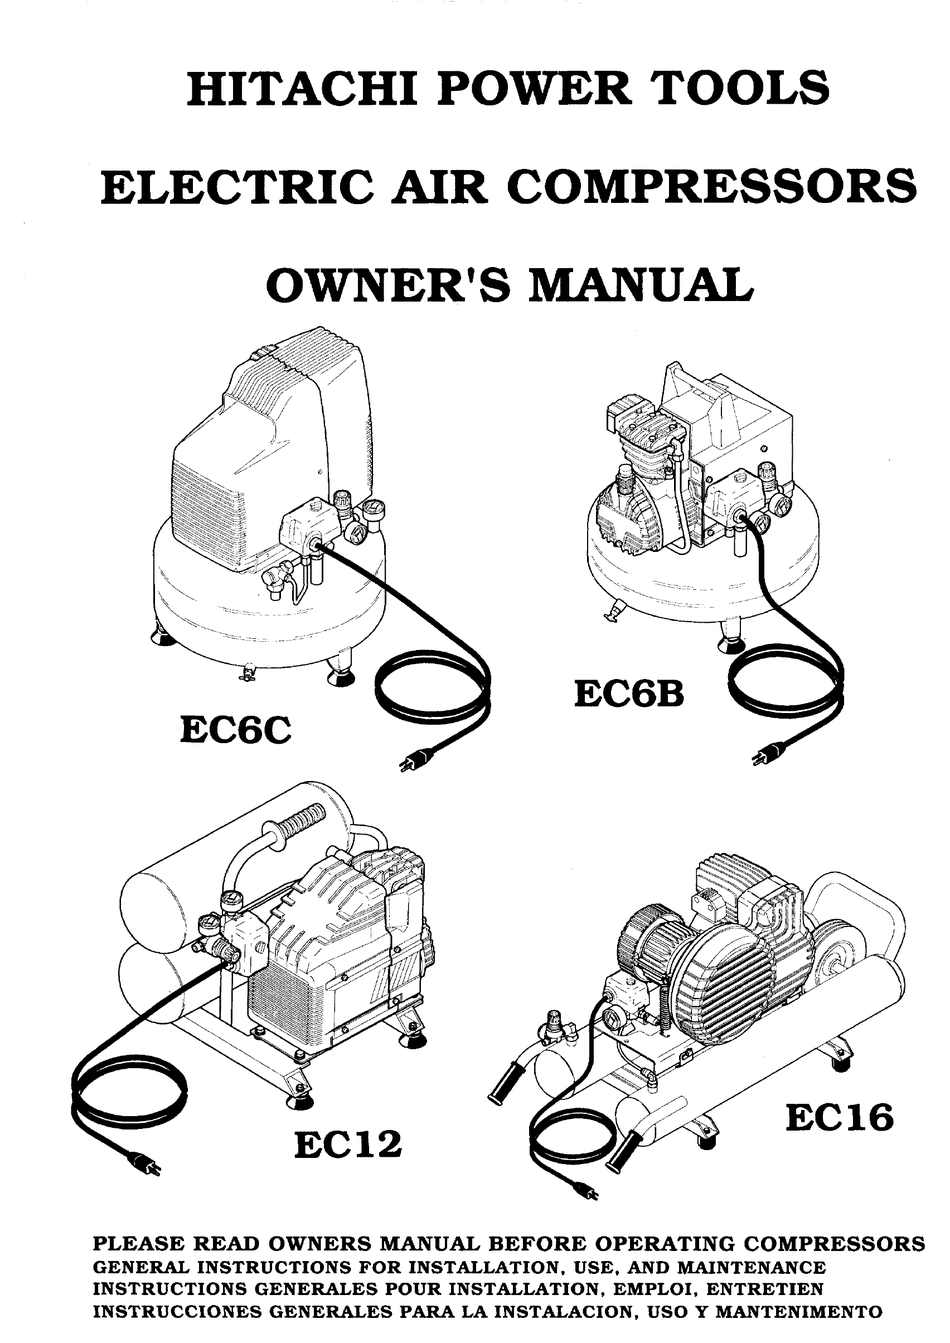 HITACHI EC6C OWNER'S MANUAL Pdf Download | ManualsLib